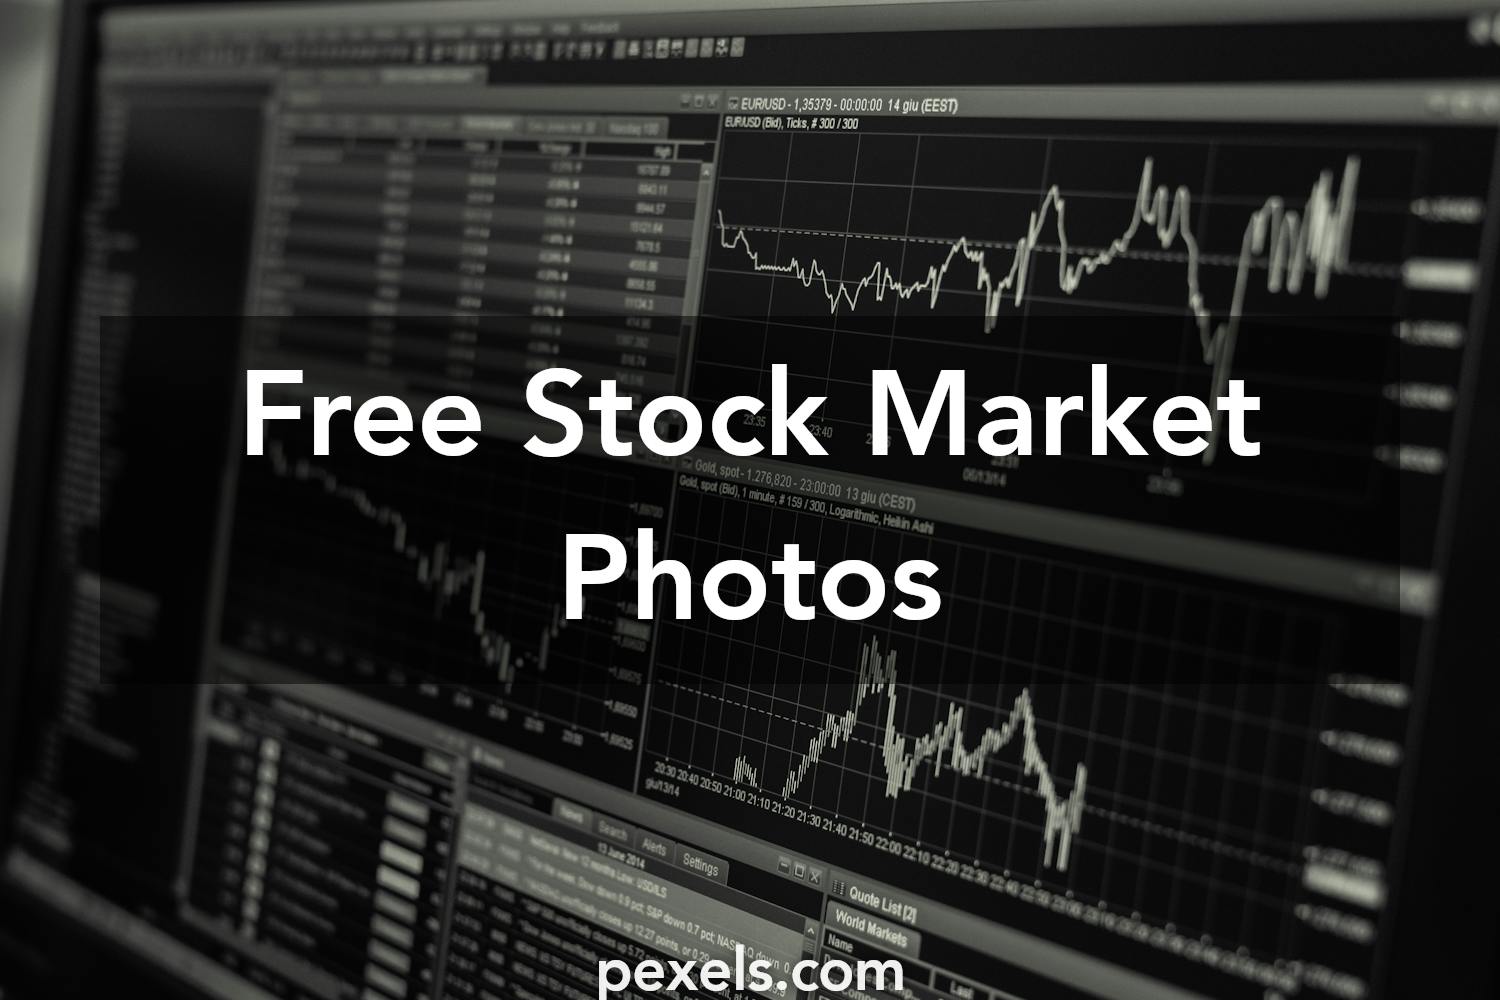 Free stock photos of stock market . Pexels